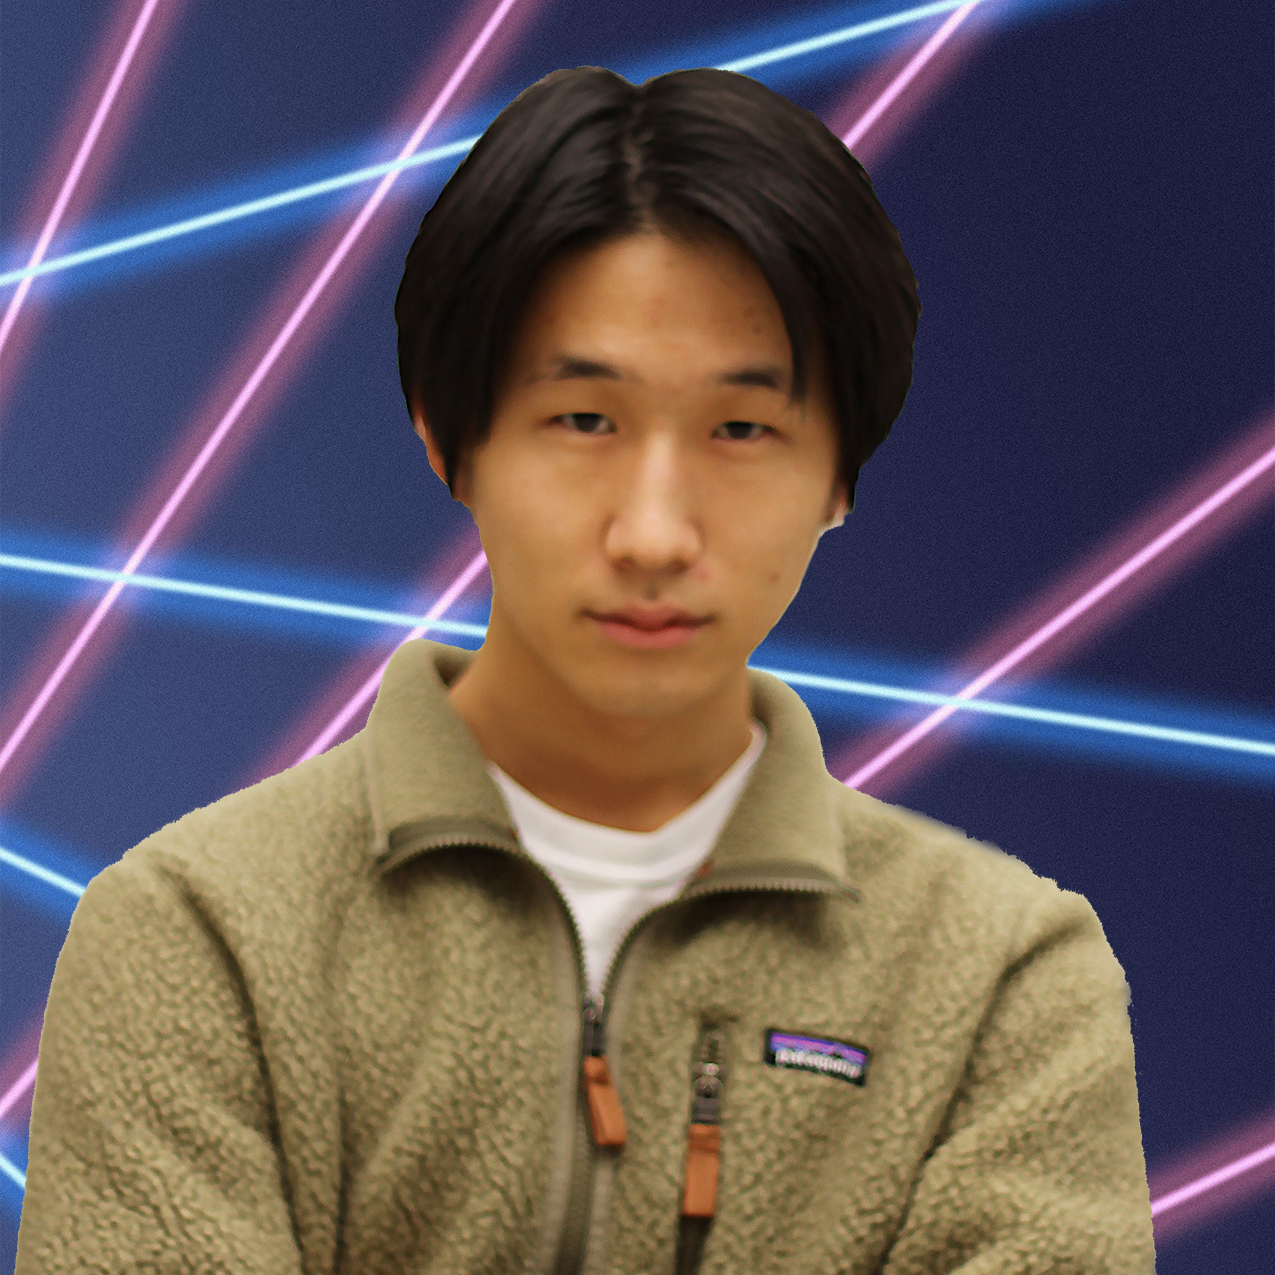 Kevin in front of laser background